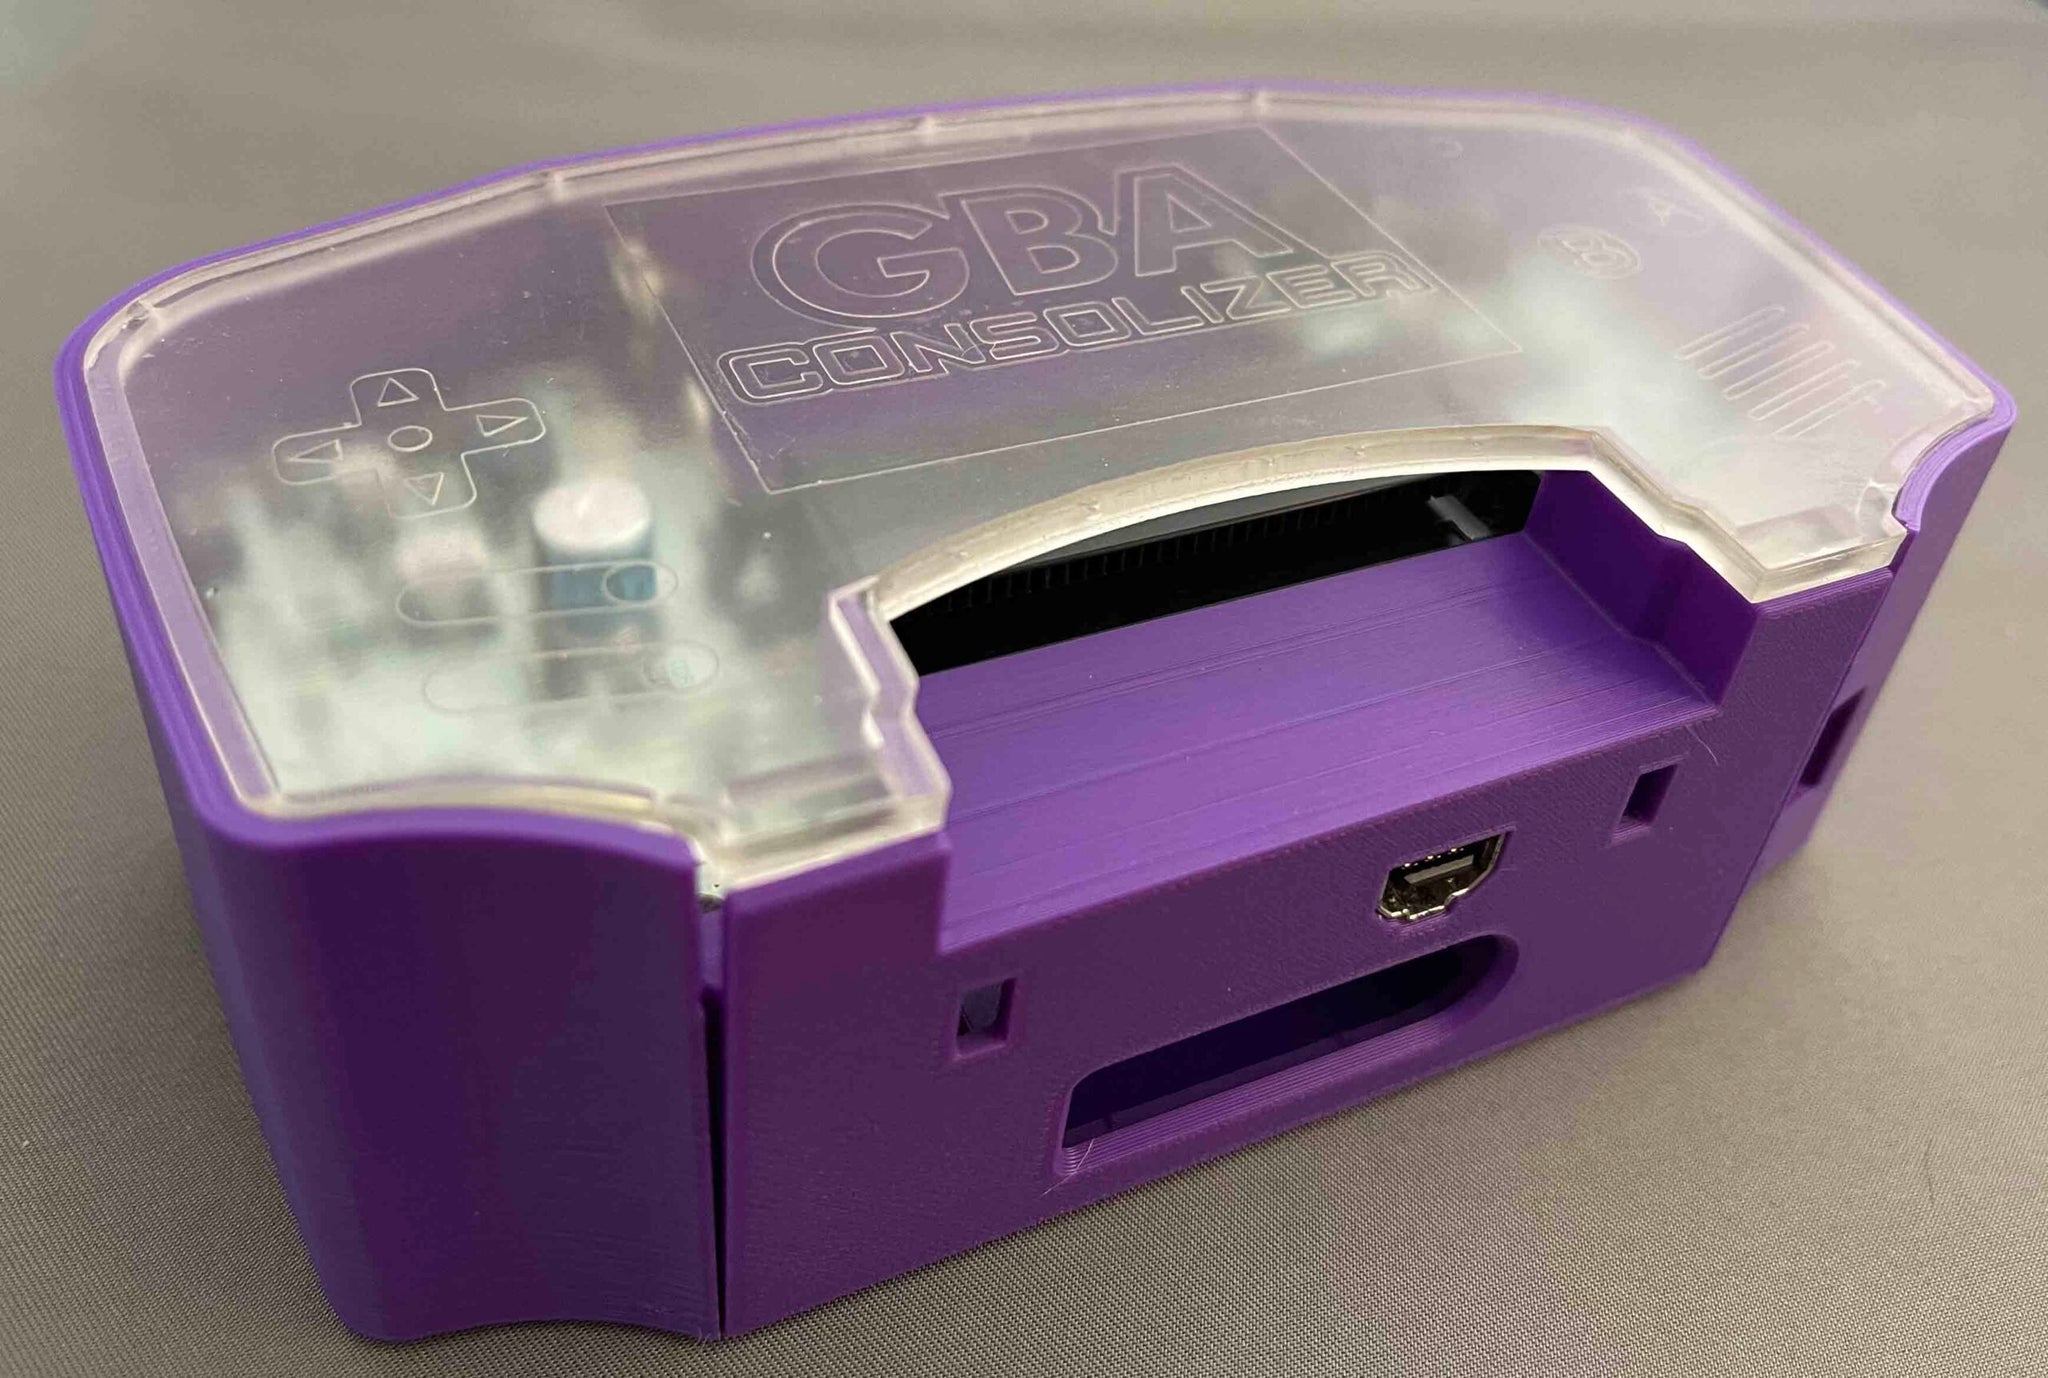 Nintendo Game Boy Advance GBA Consolizer Services